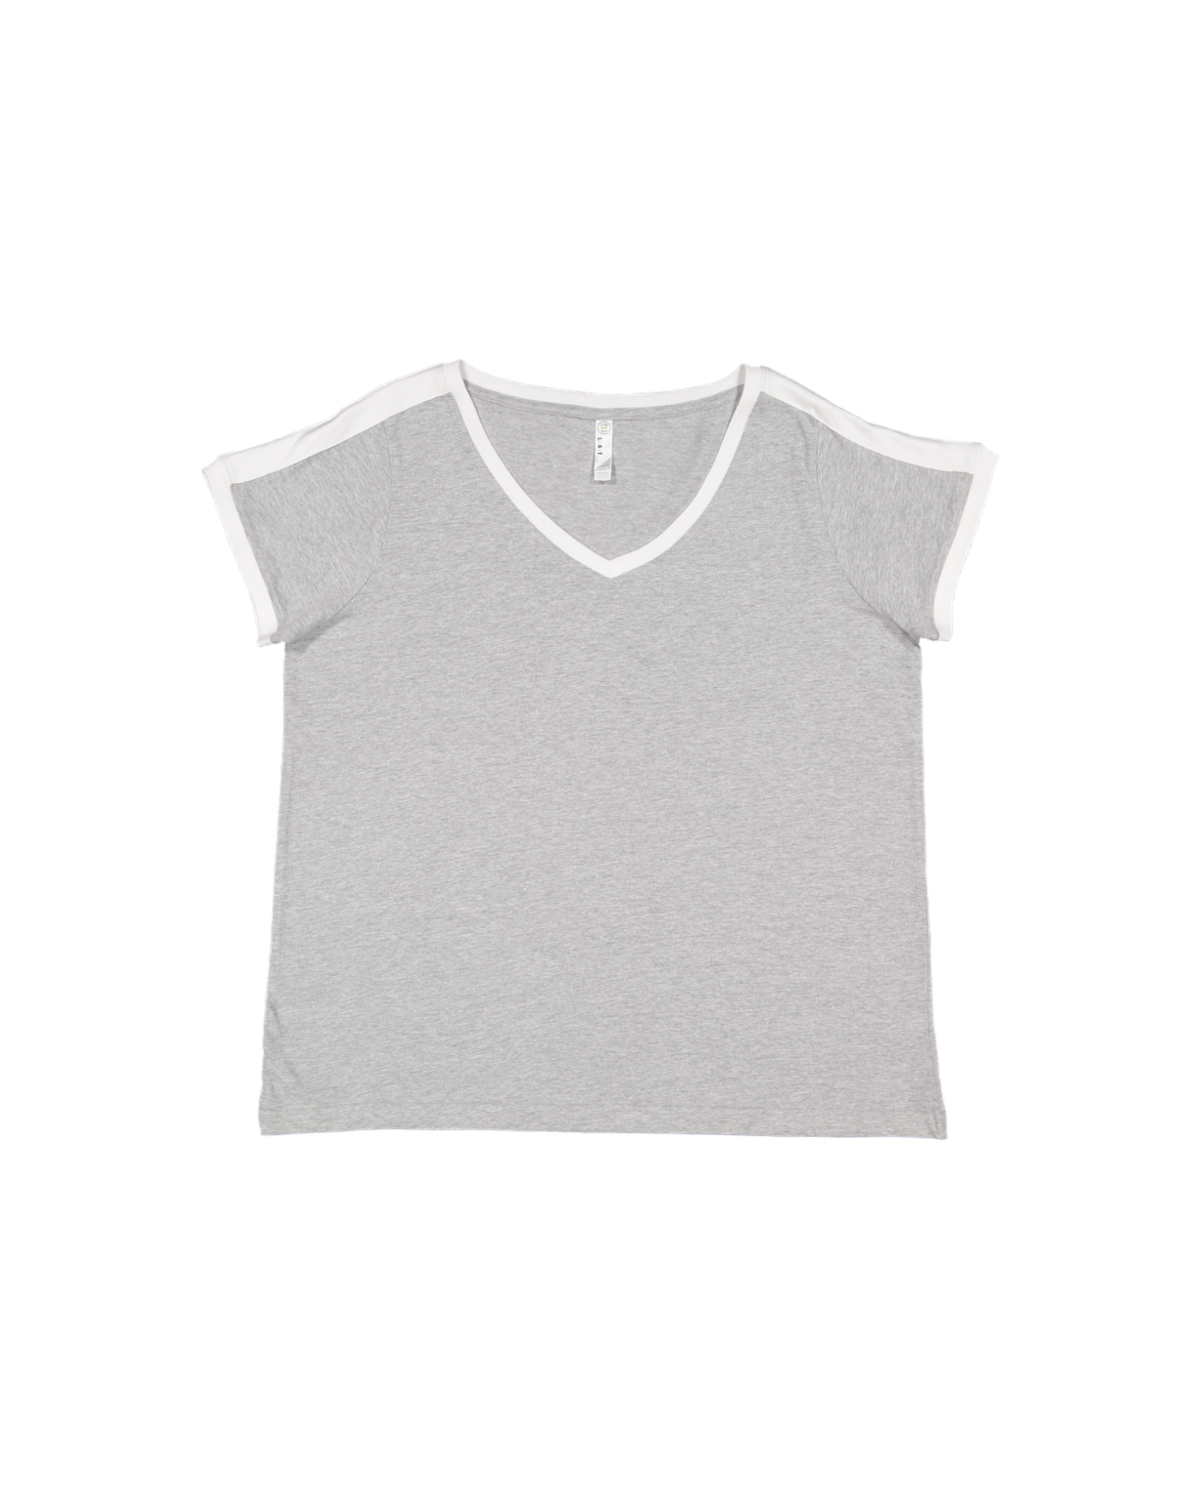 'LAT 3832 Ladies Curvy Soccer Ringer T-Shirt'